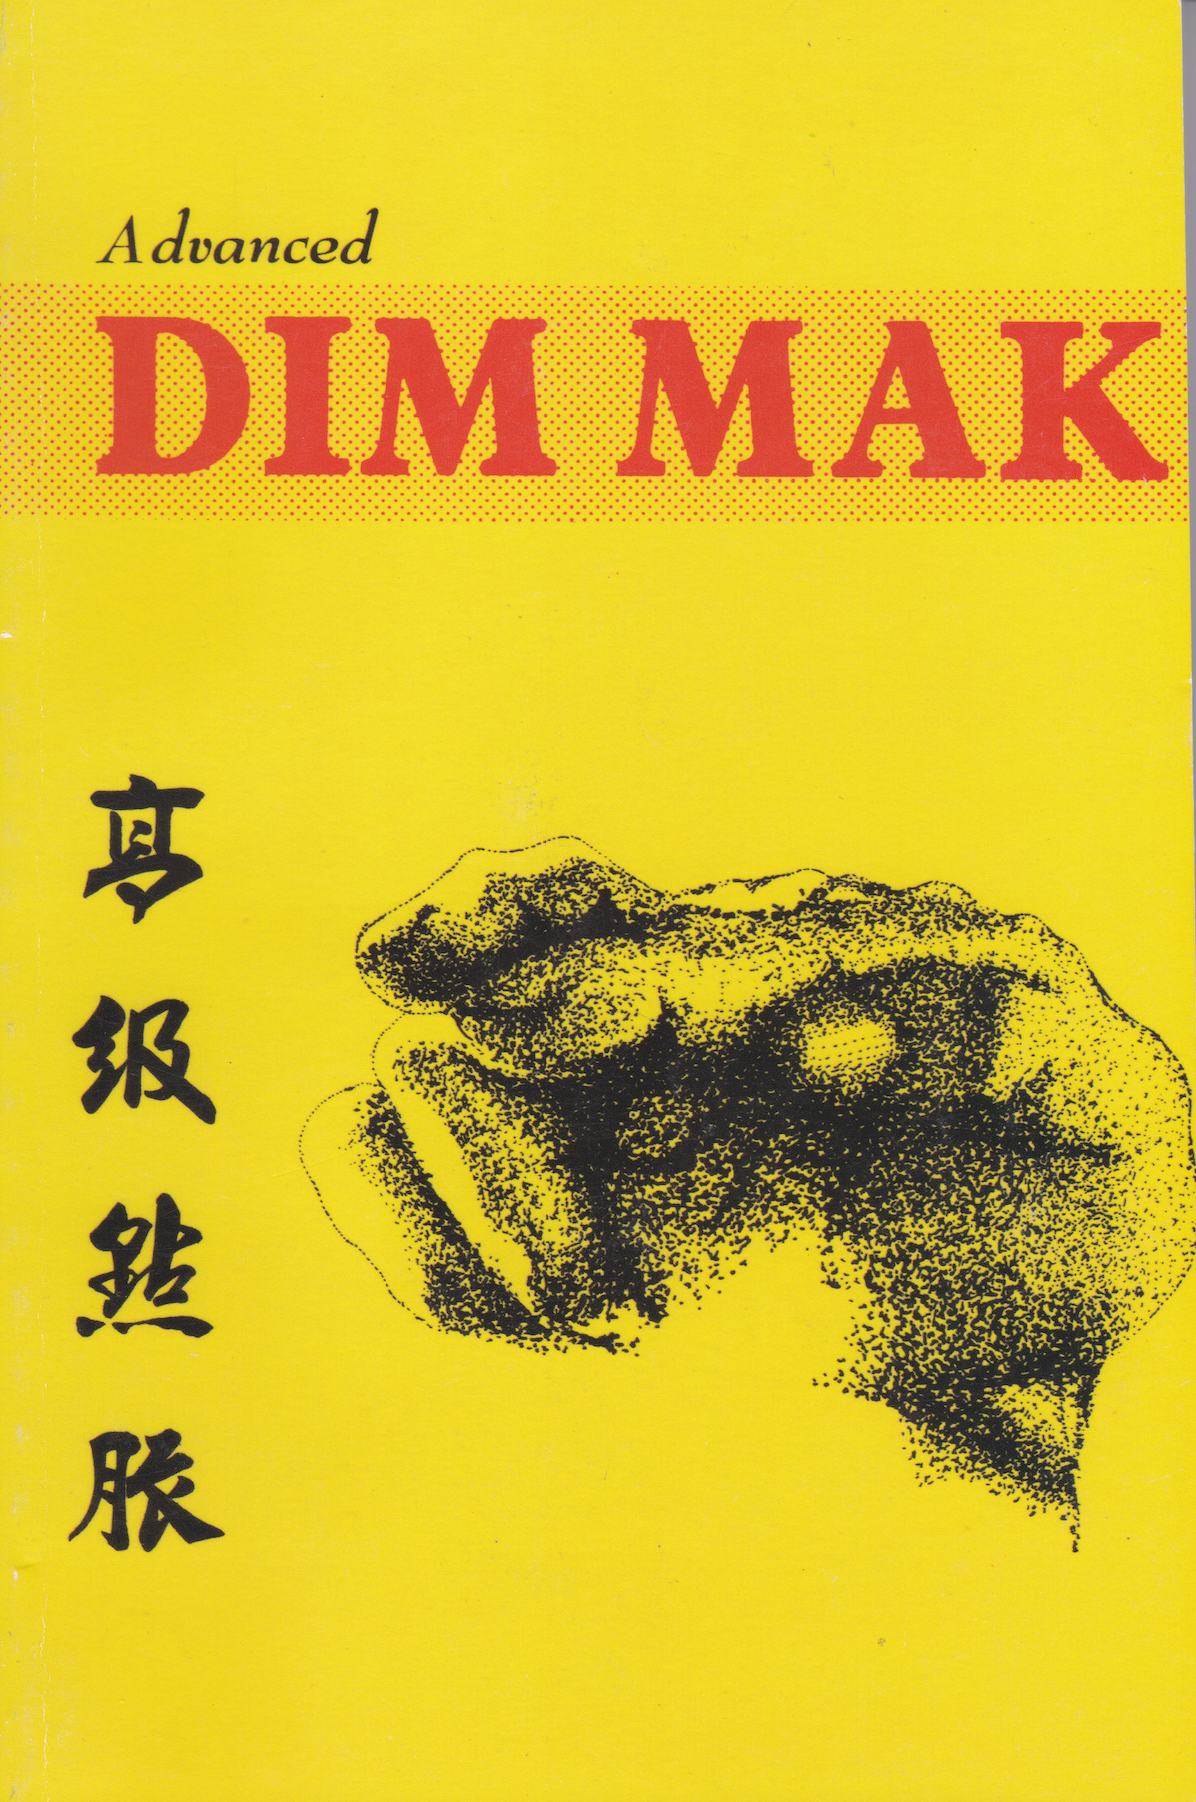 Advanced Dim Mak Book by Douglas Hsieh